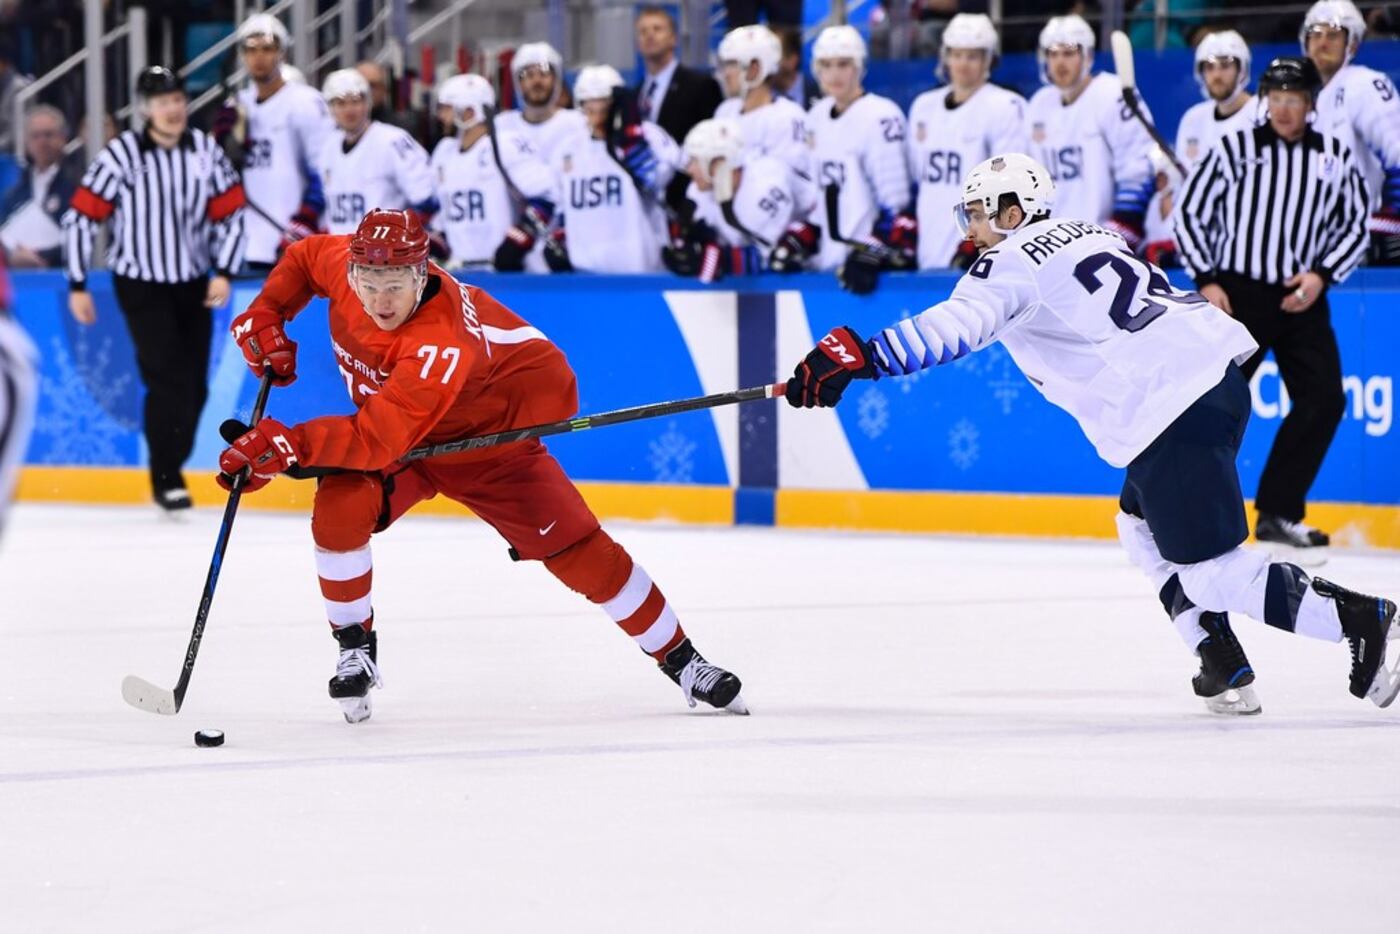 Russia's Kirill Kaprizov and USA's Mark Arcobello vie for the puck in the men's ice hockey...